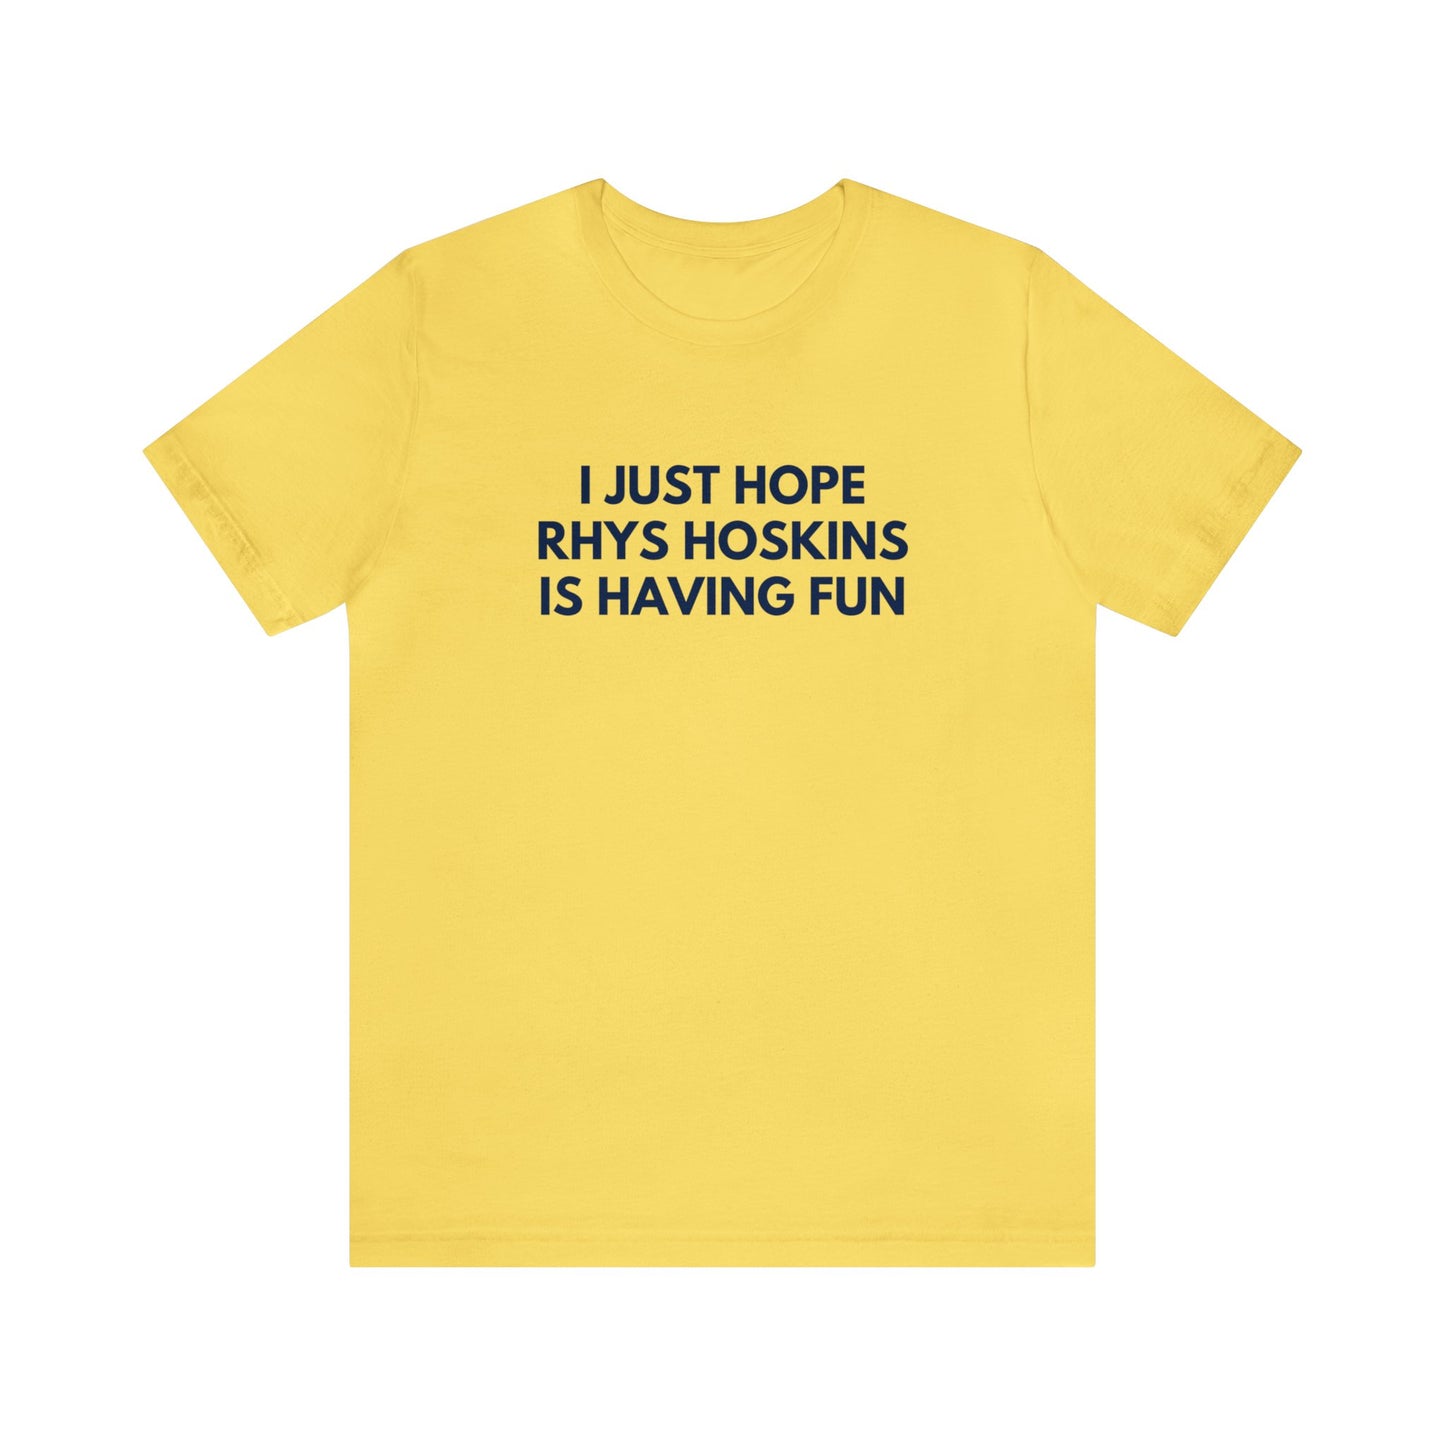 Rhys Hoskins Having Fun - Unisex T-Shirt